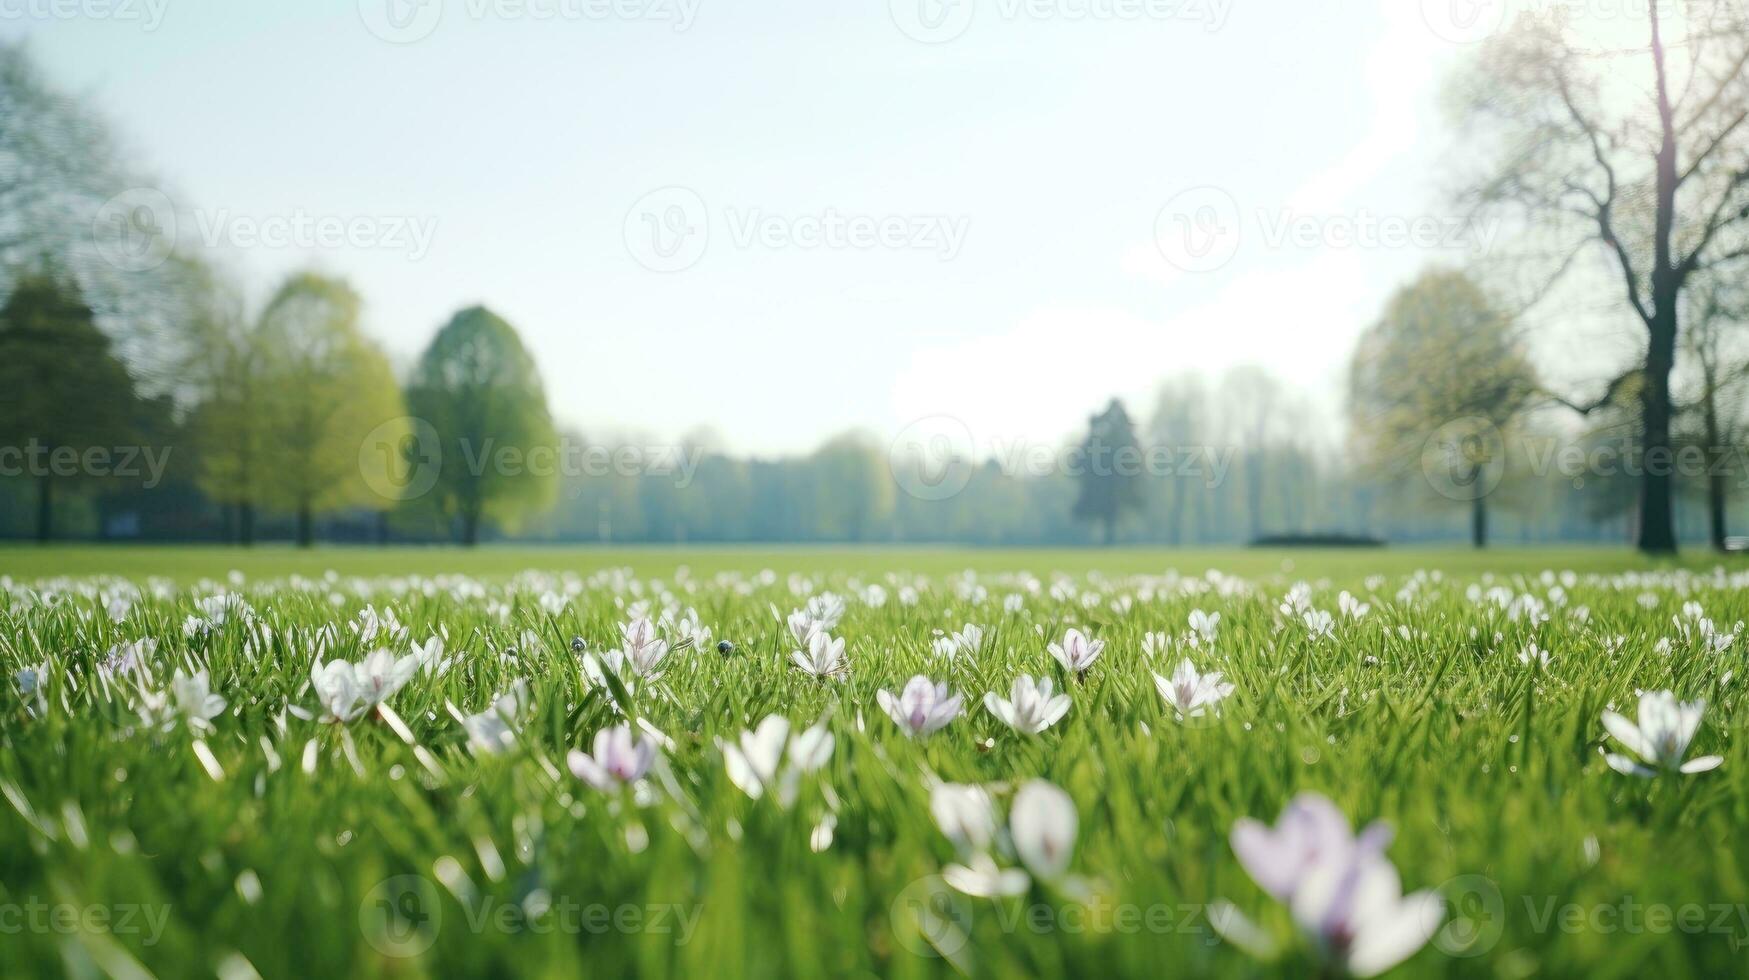 AI generated Flowers, background image, flower field, brightness, freshness, scenery, landscape, nature photo